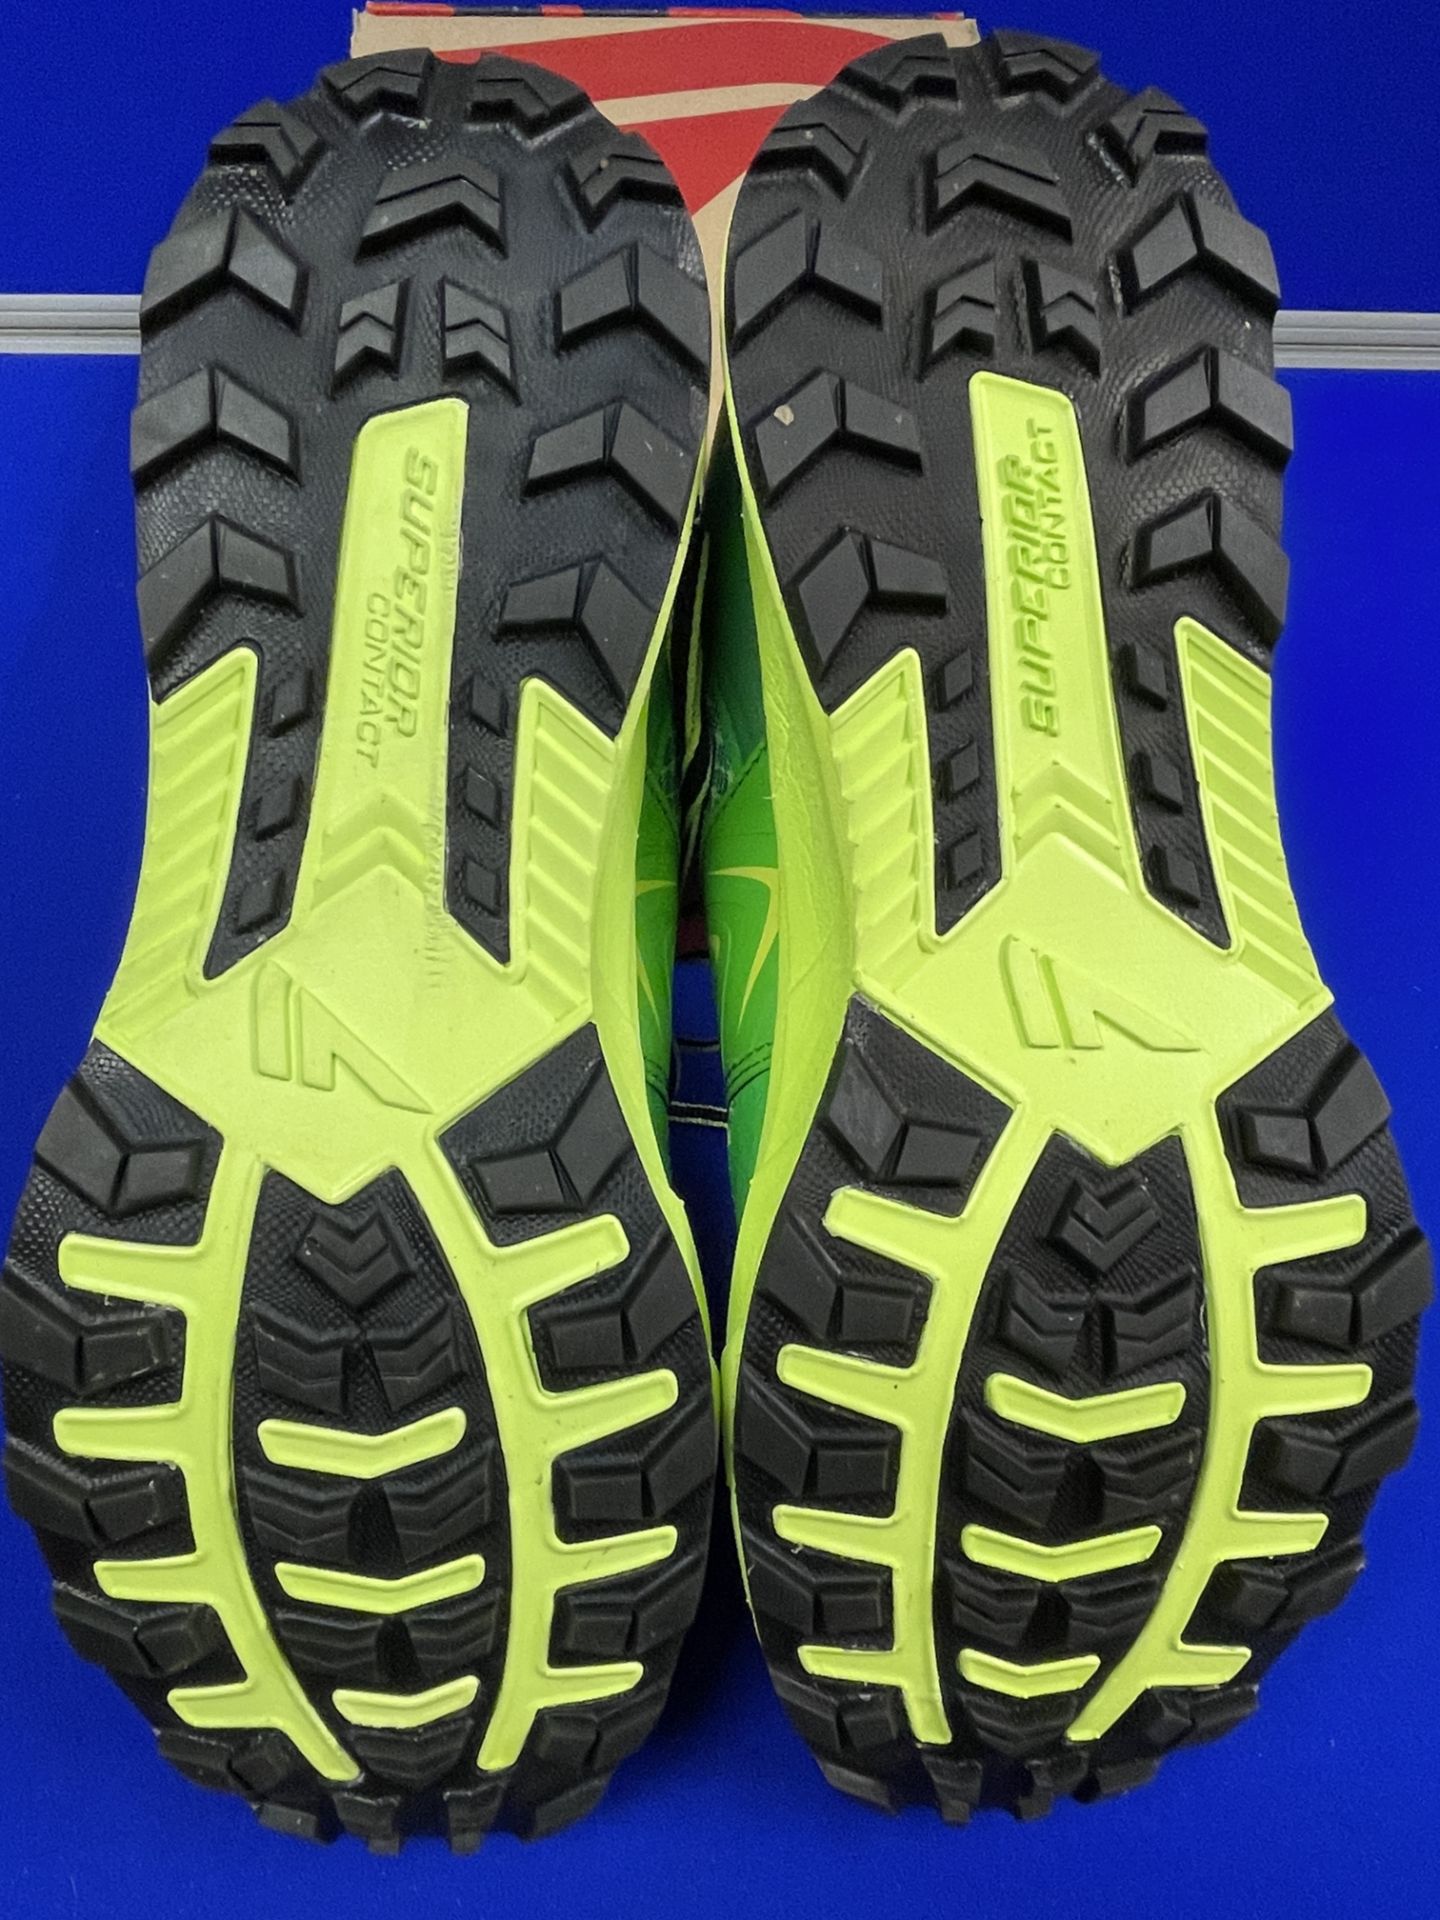 Ultra Men's Running Shoes | UK 11 - Image 3 of 4